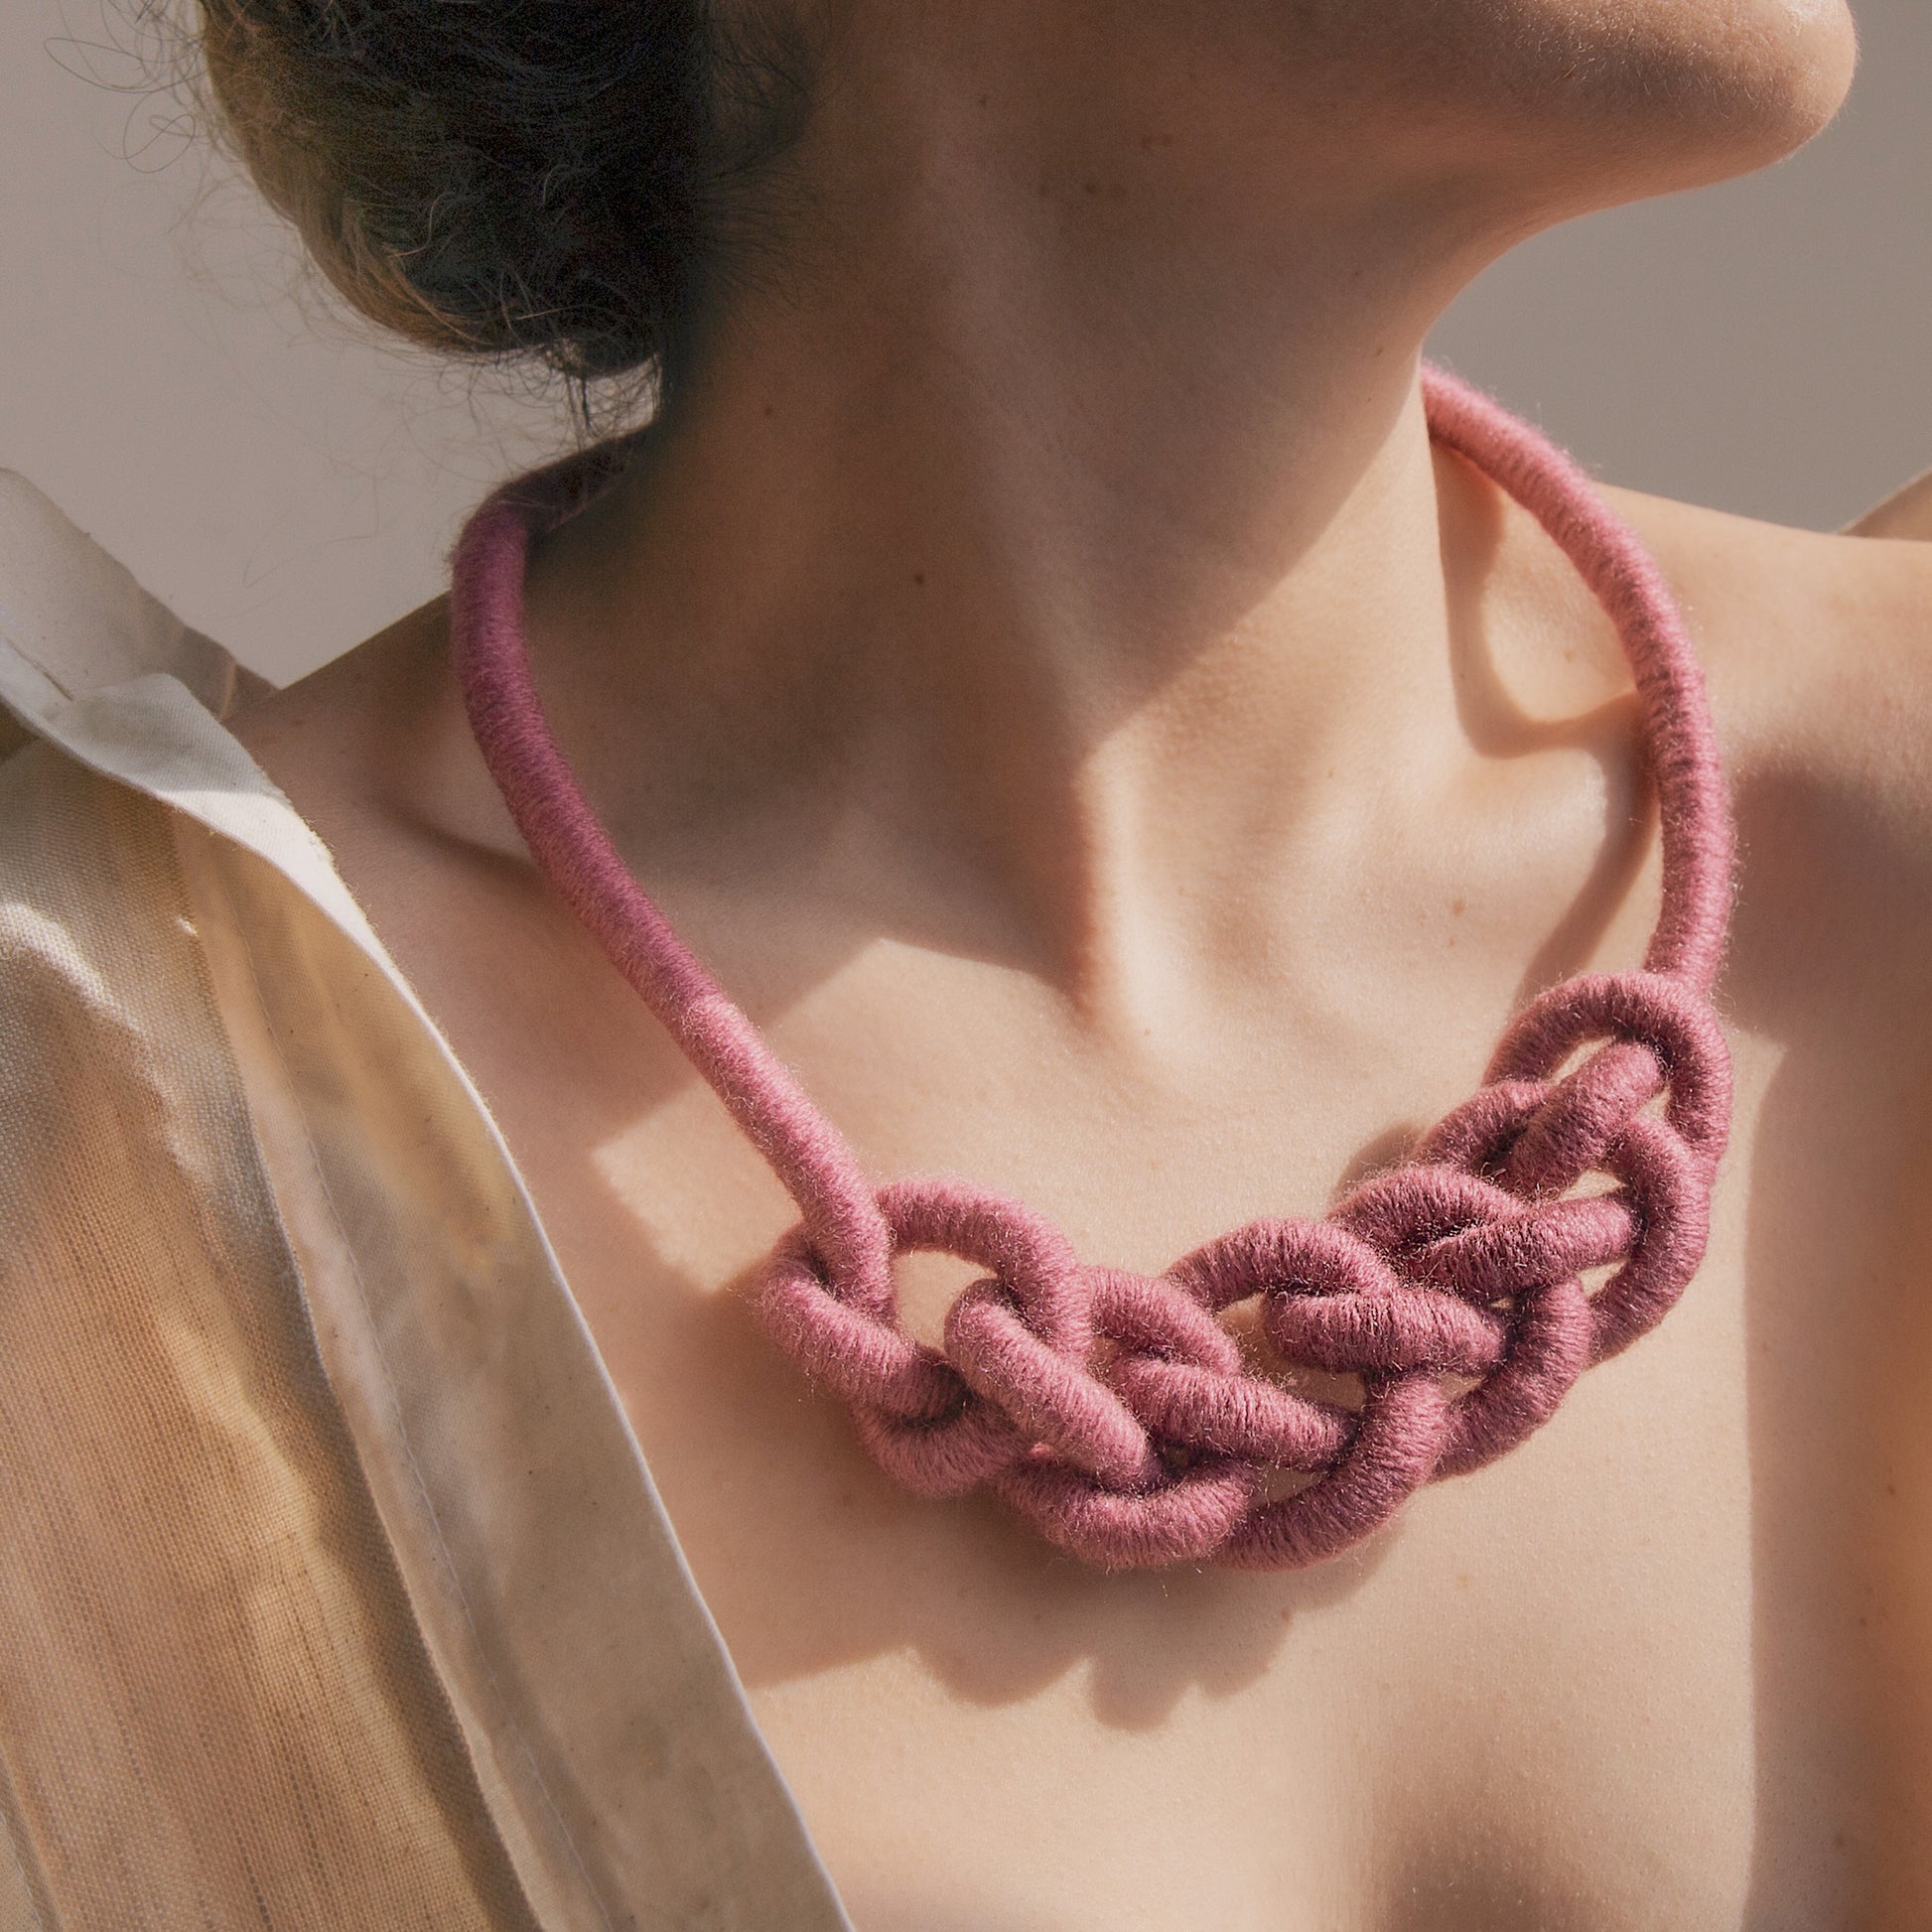 Isabella Chain necklace - Super seconds - Knottinger